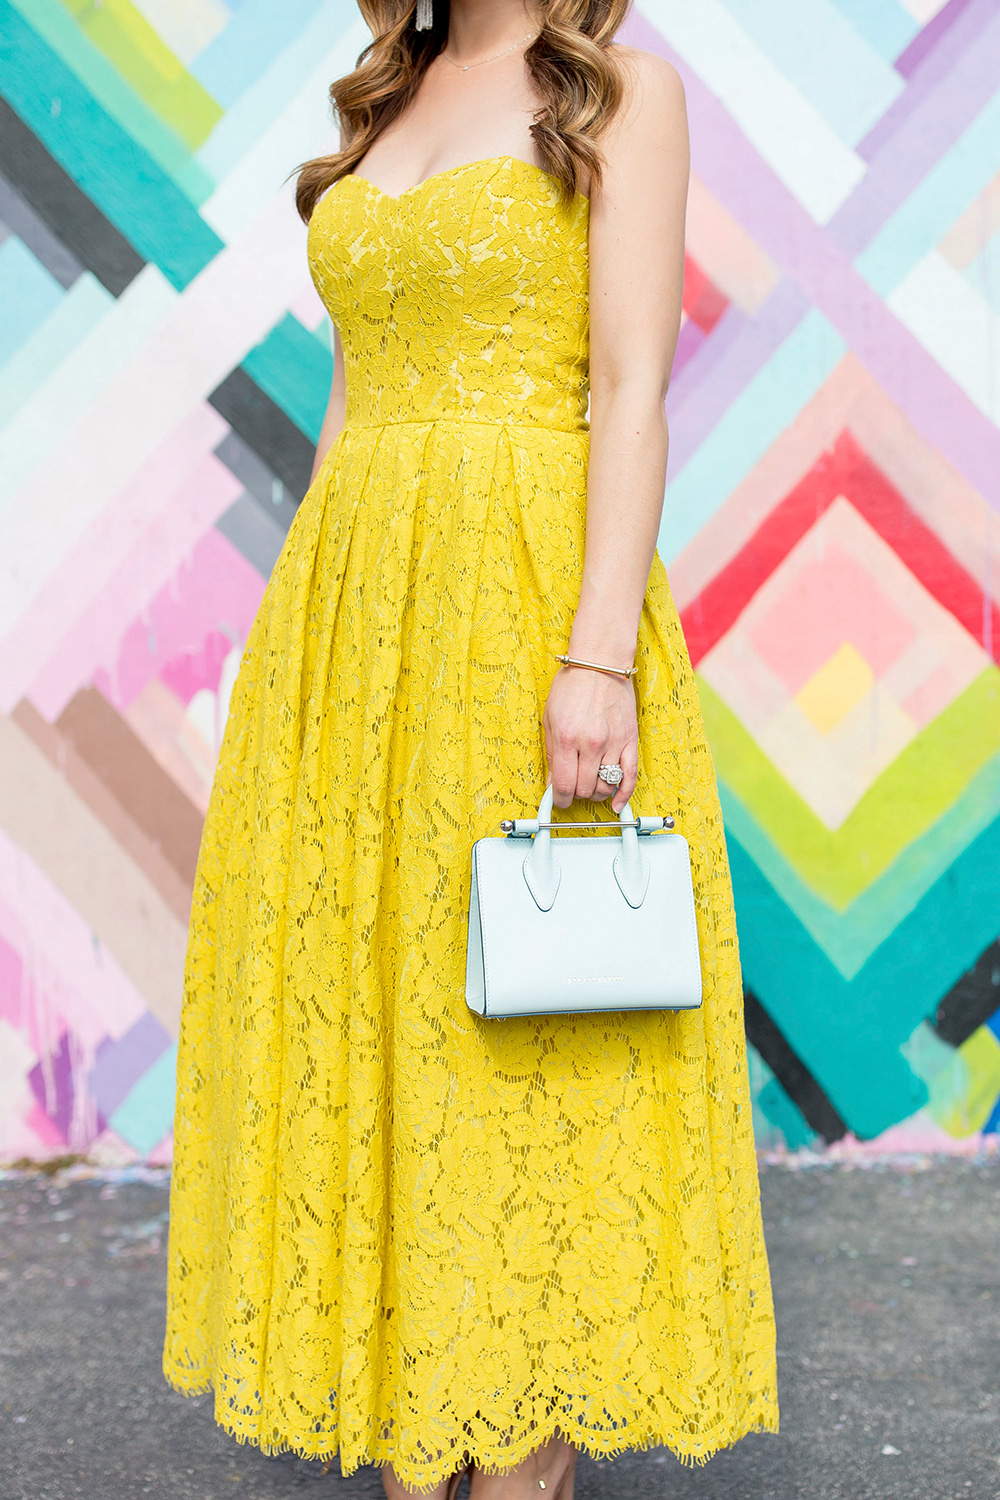 ASOS strapless yellow lace dress